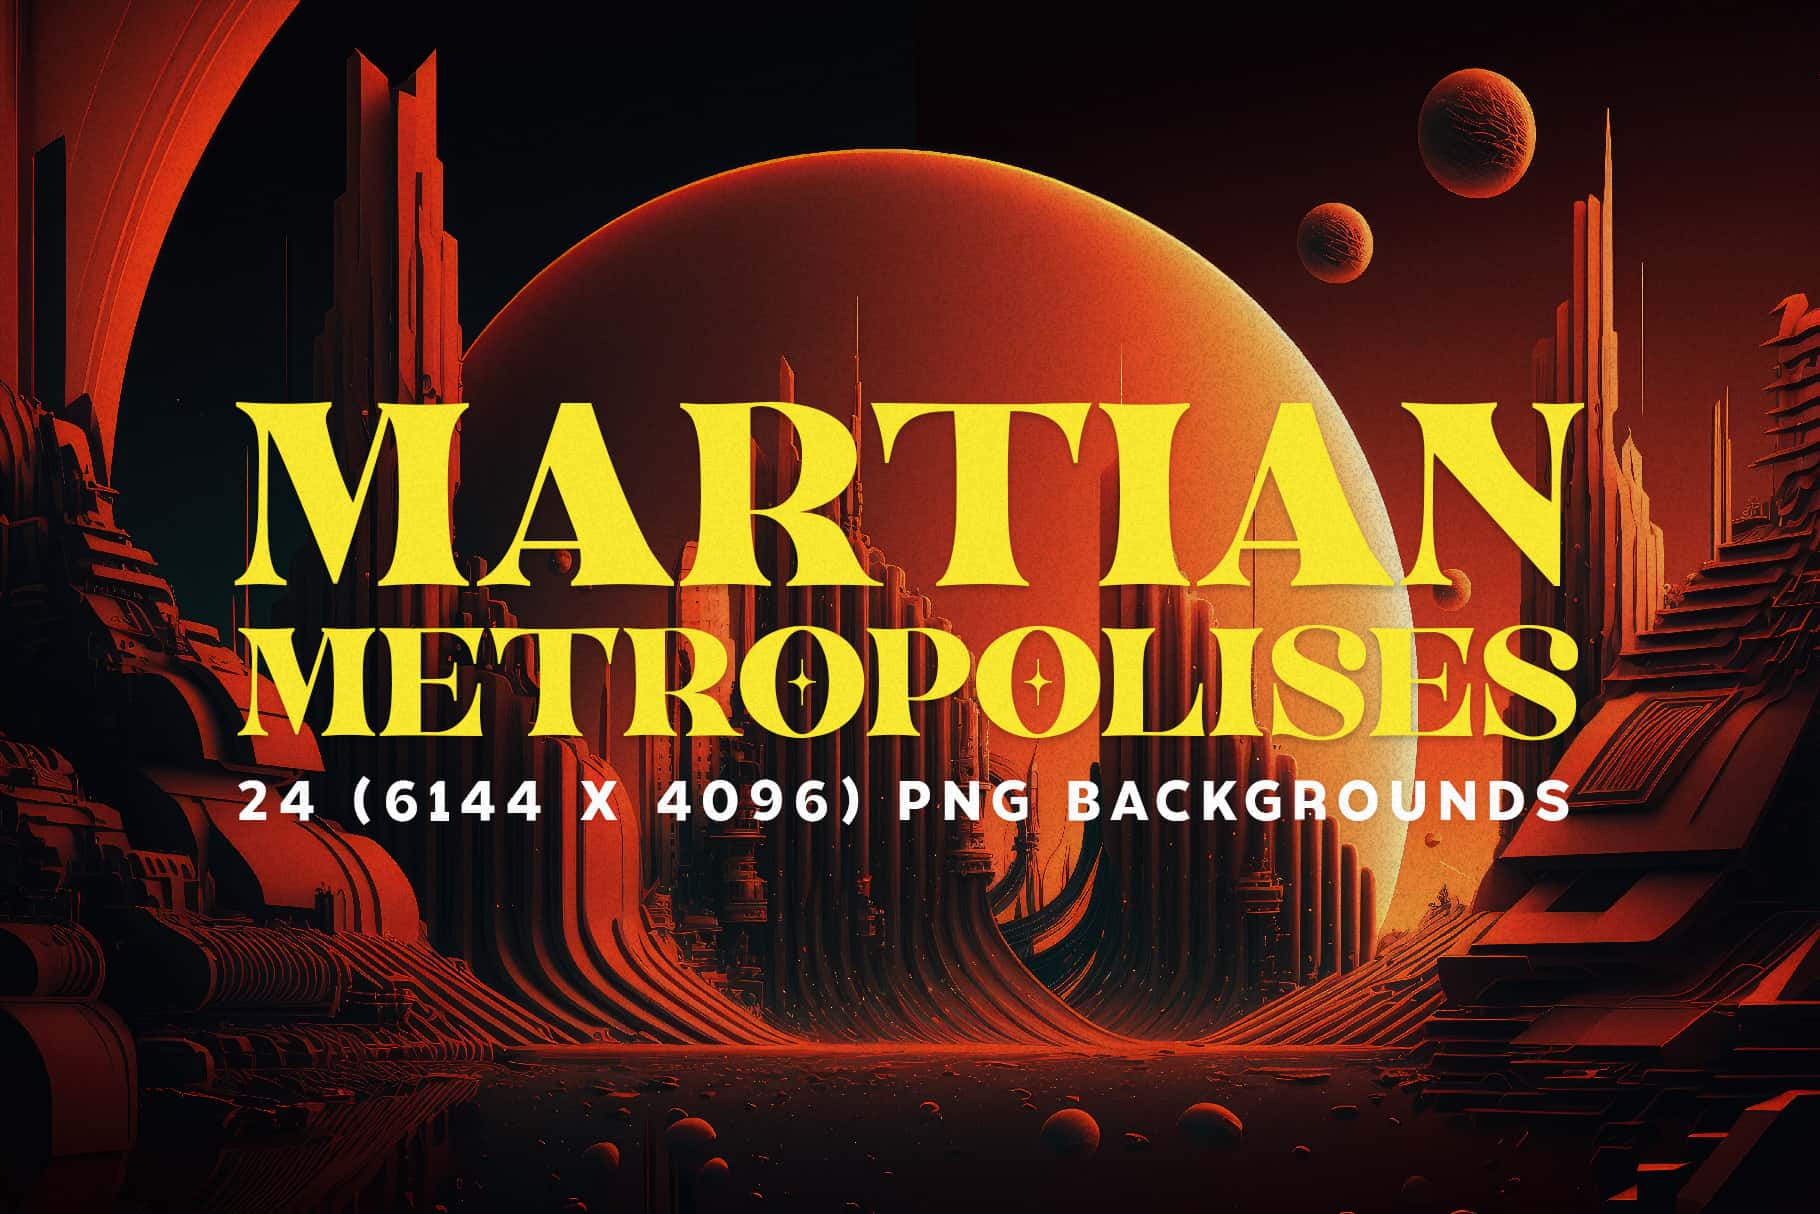 Martian Metropolises Cover